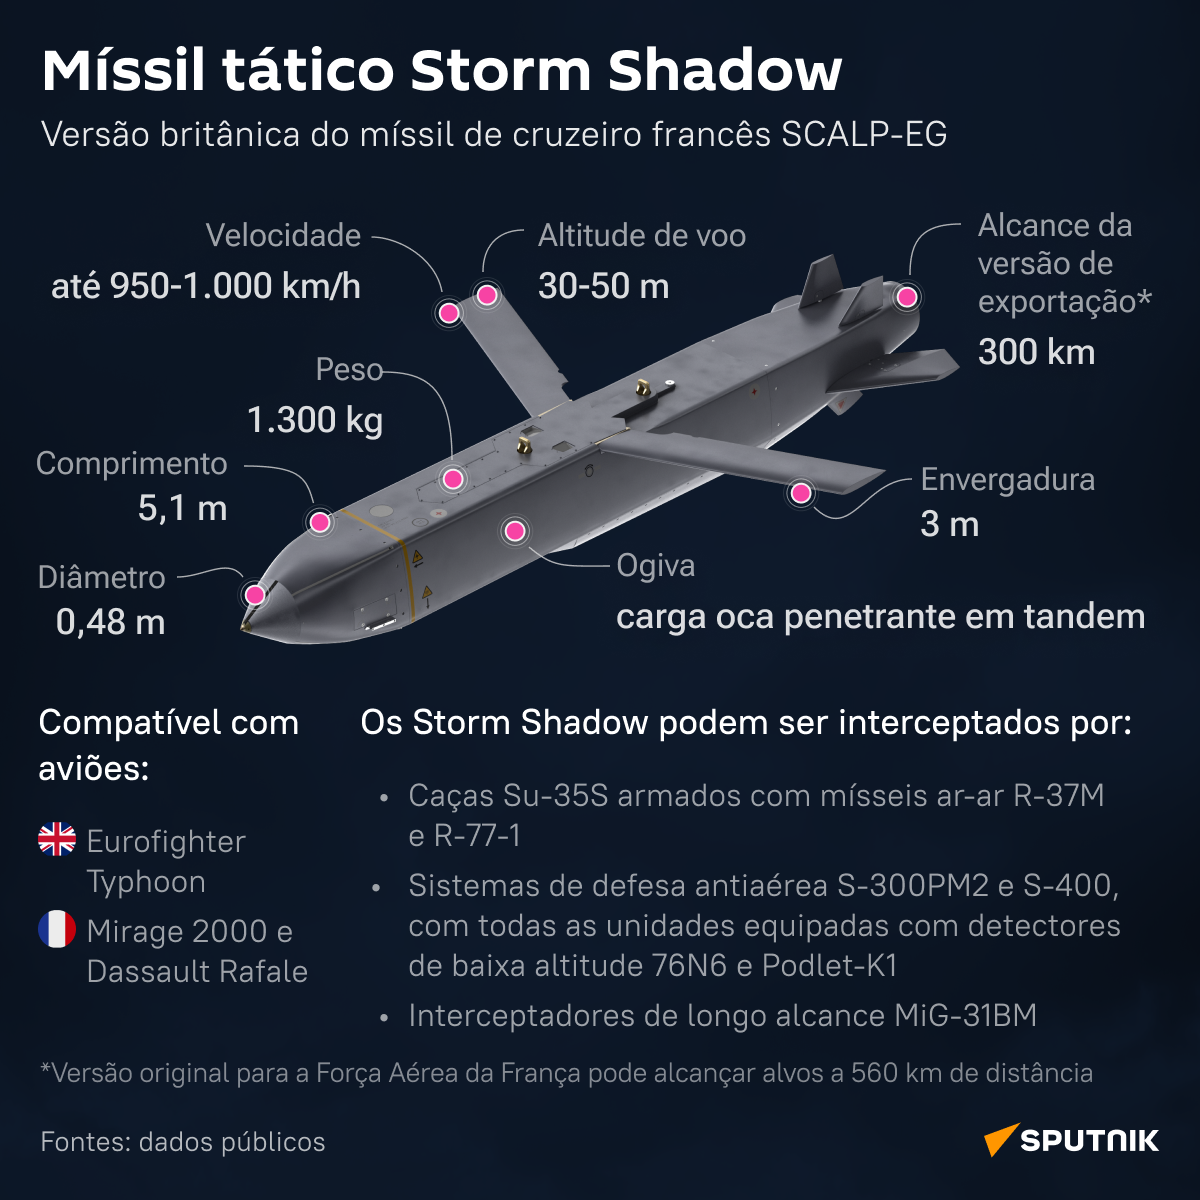 Míssil tático Storm Shadow - Sputnik Brasil